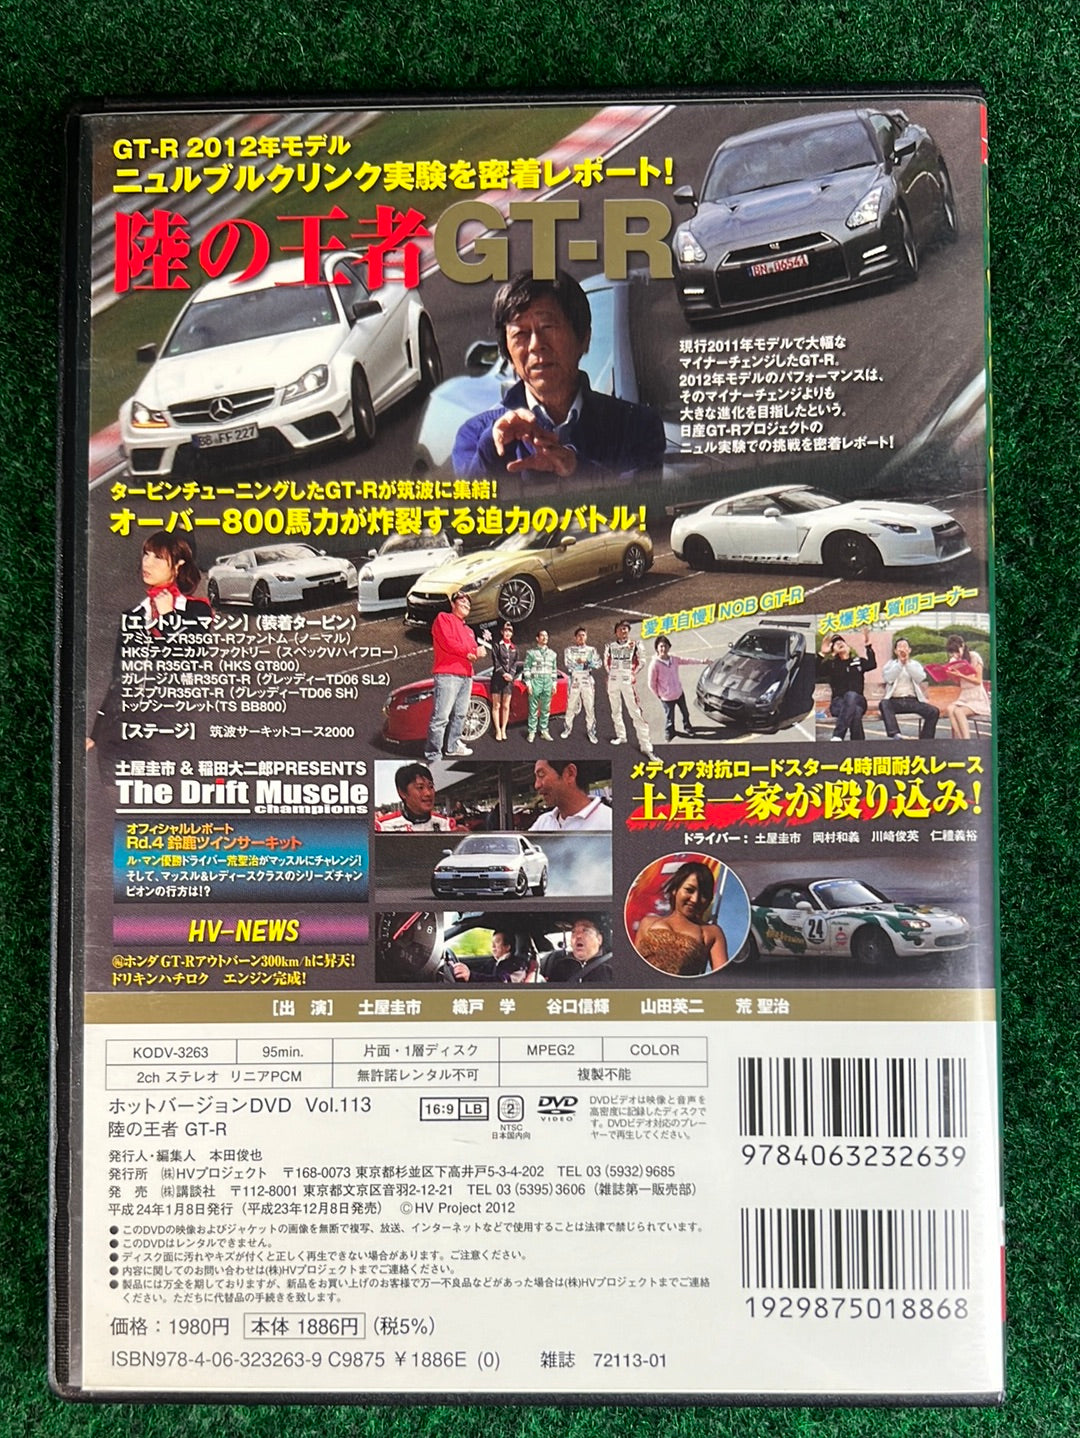 Hot Version DVD - Vol. 113